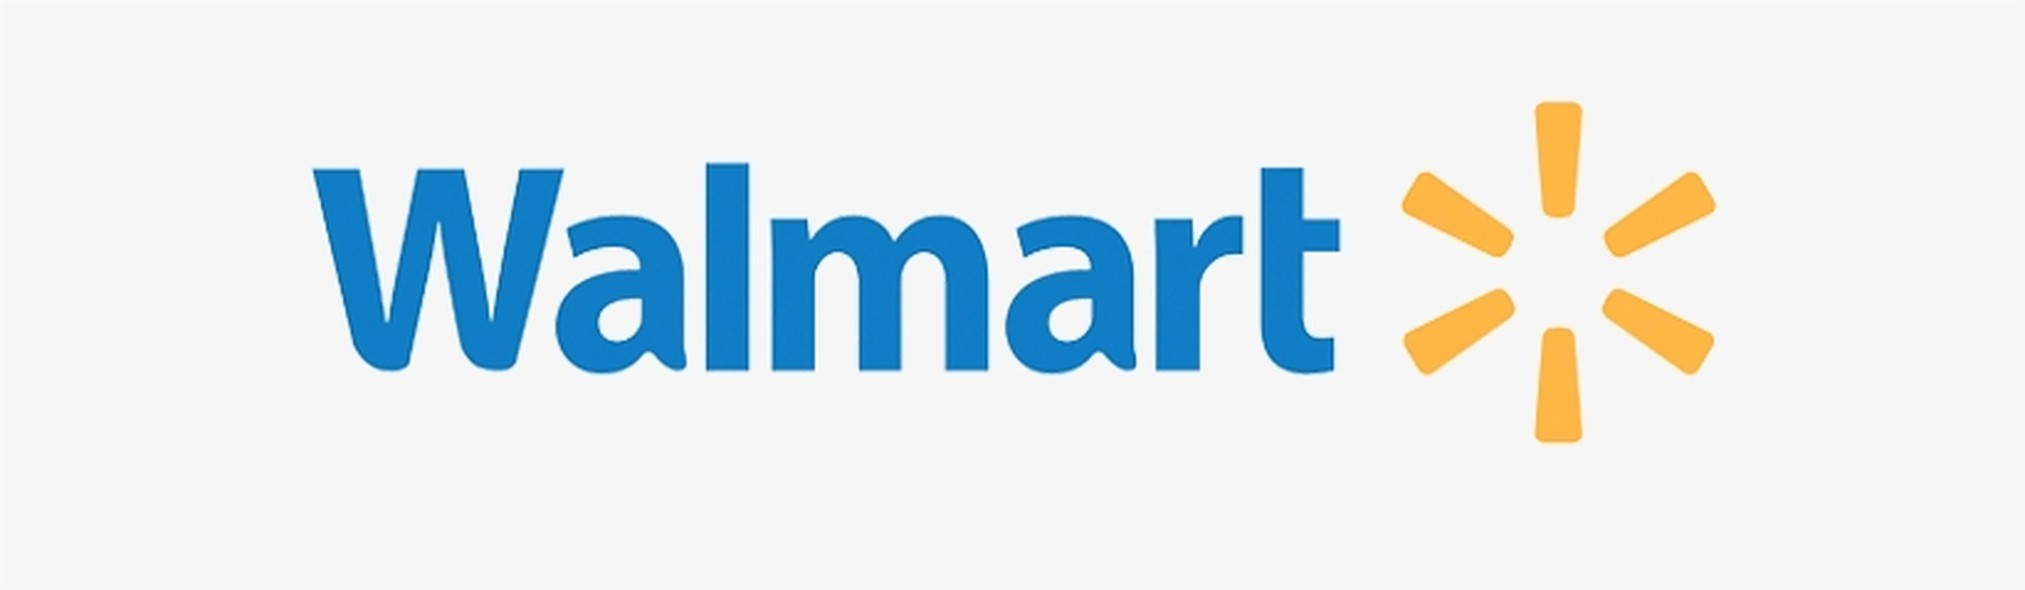 Simplistic Walmart Logo Background